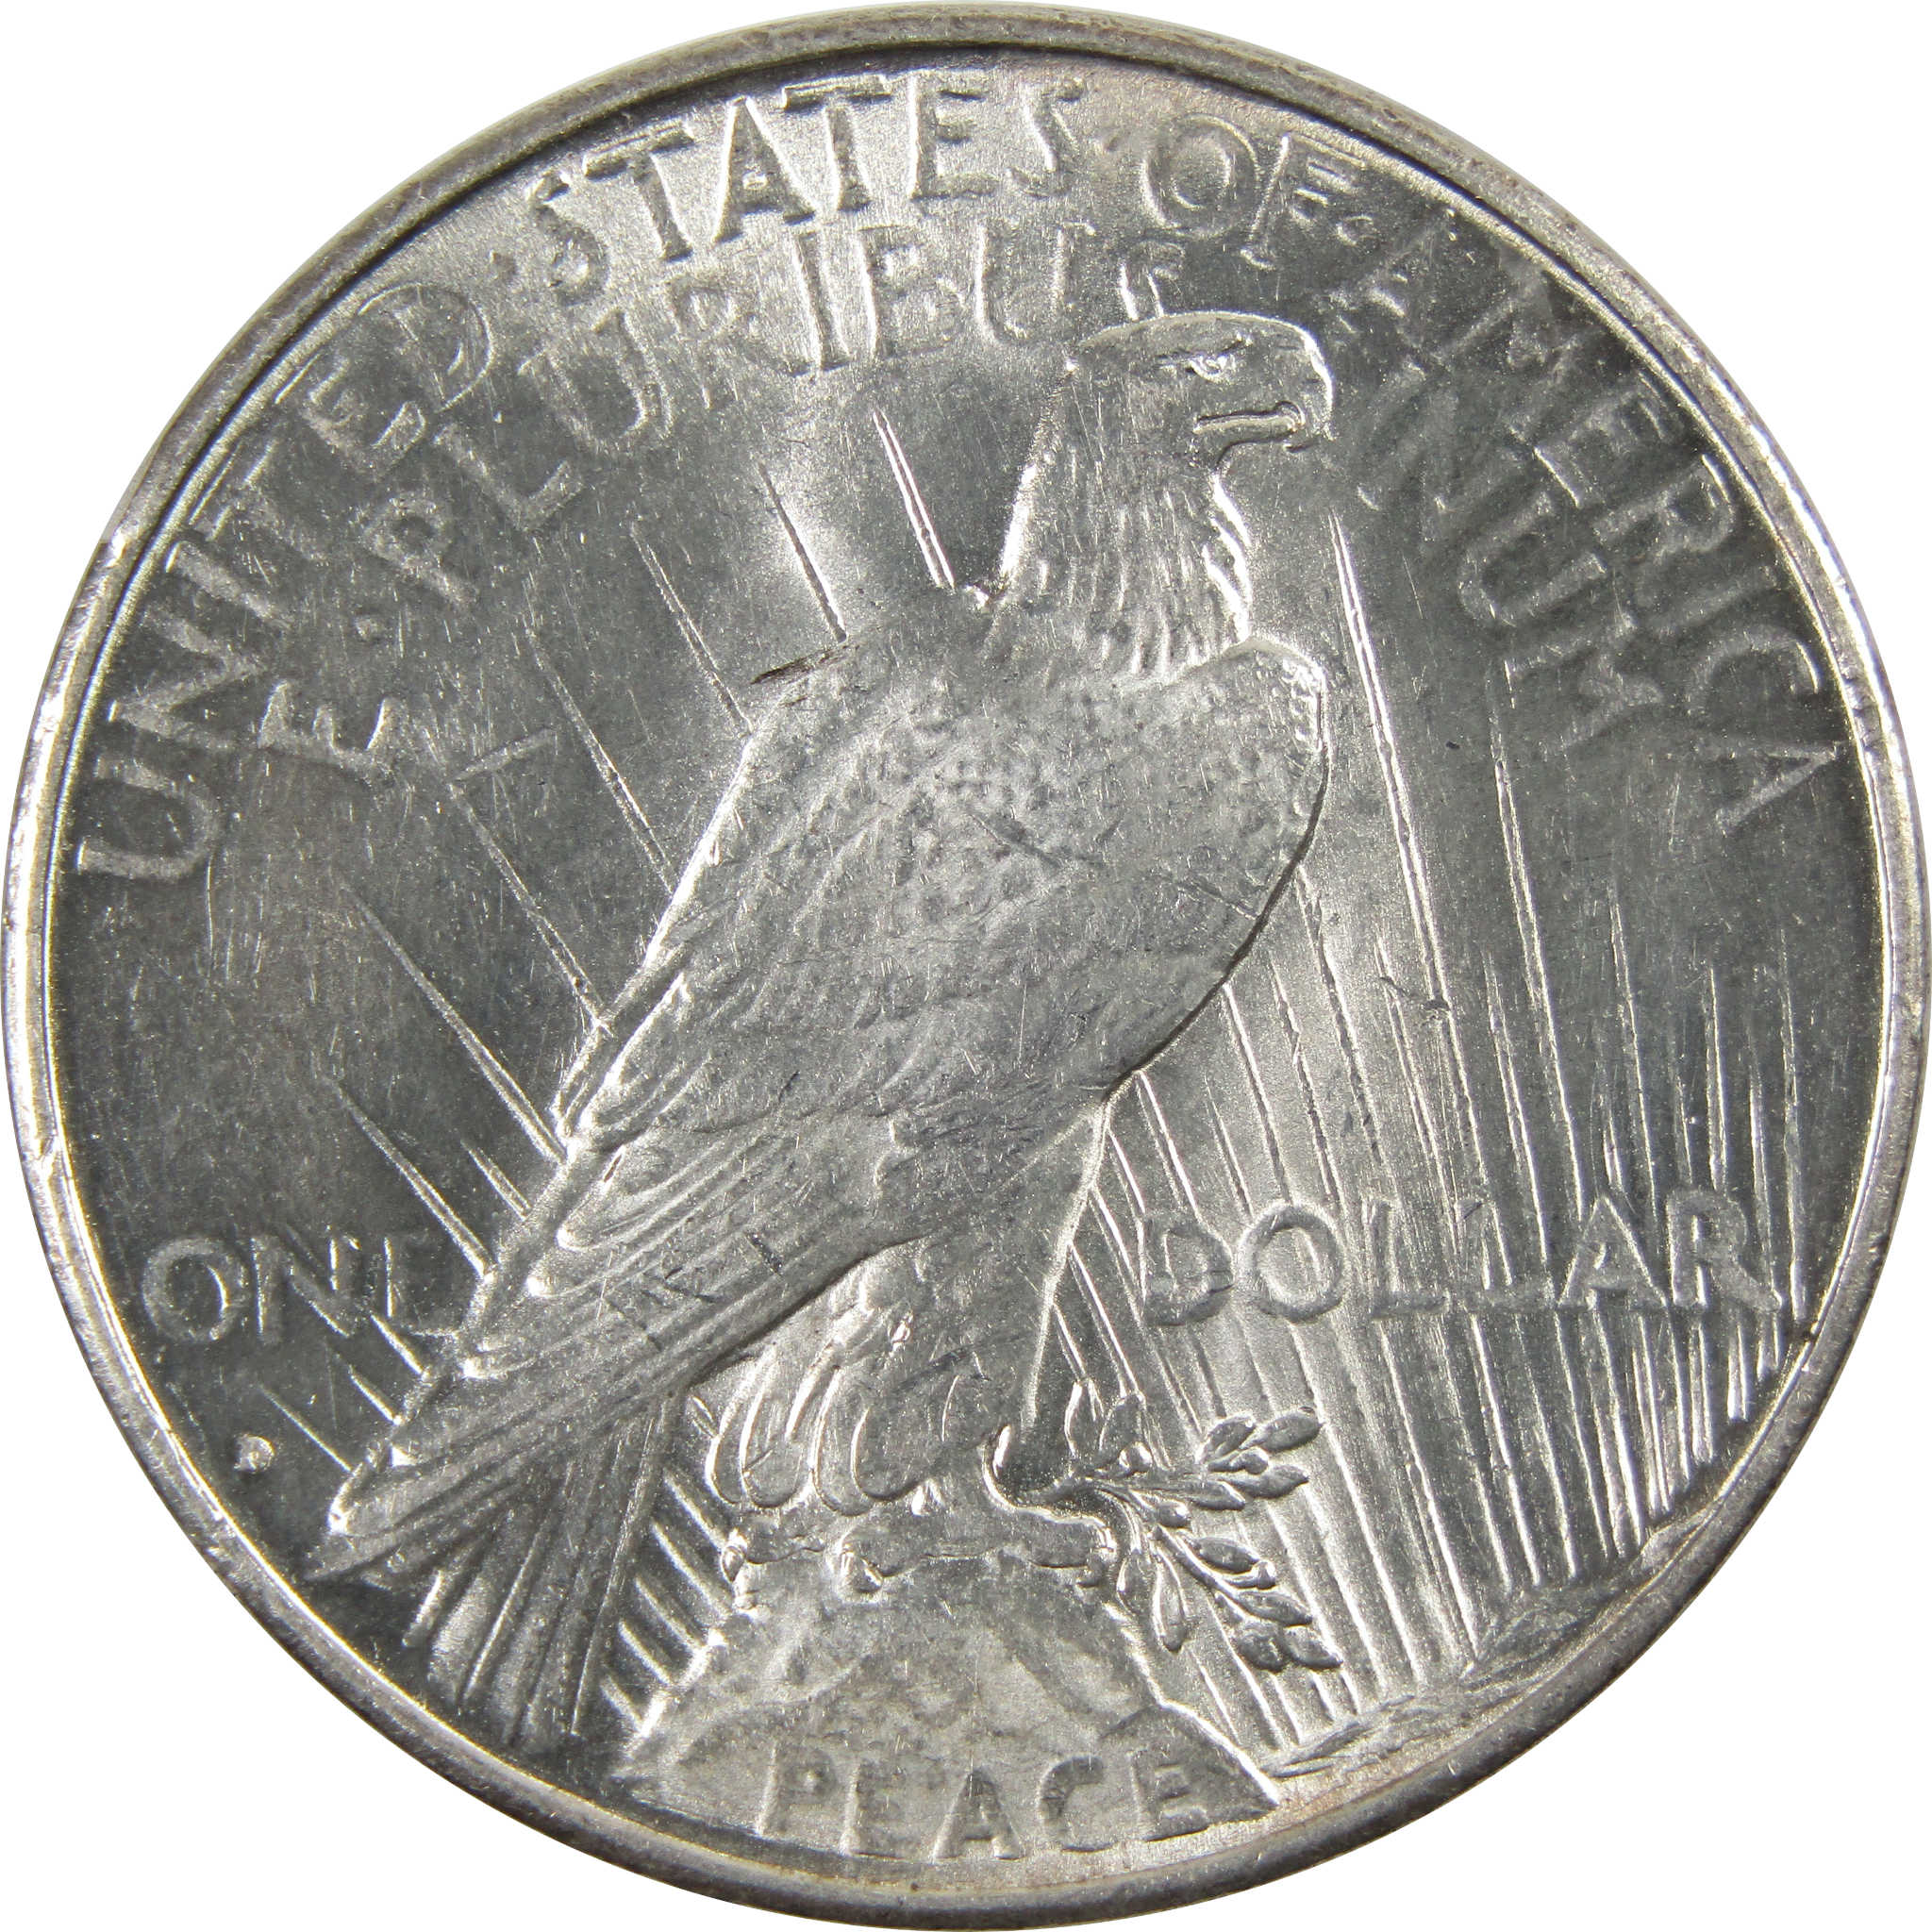 1934 D Peace Dollar Borderline Uncirculated 90% Silver $1 SKU:I8183